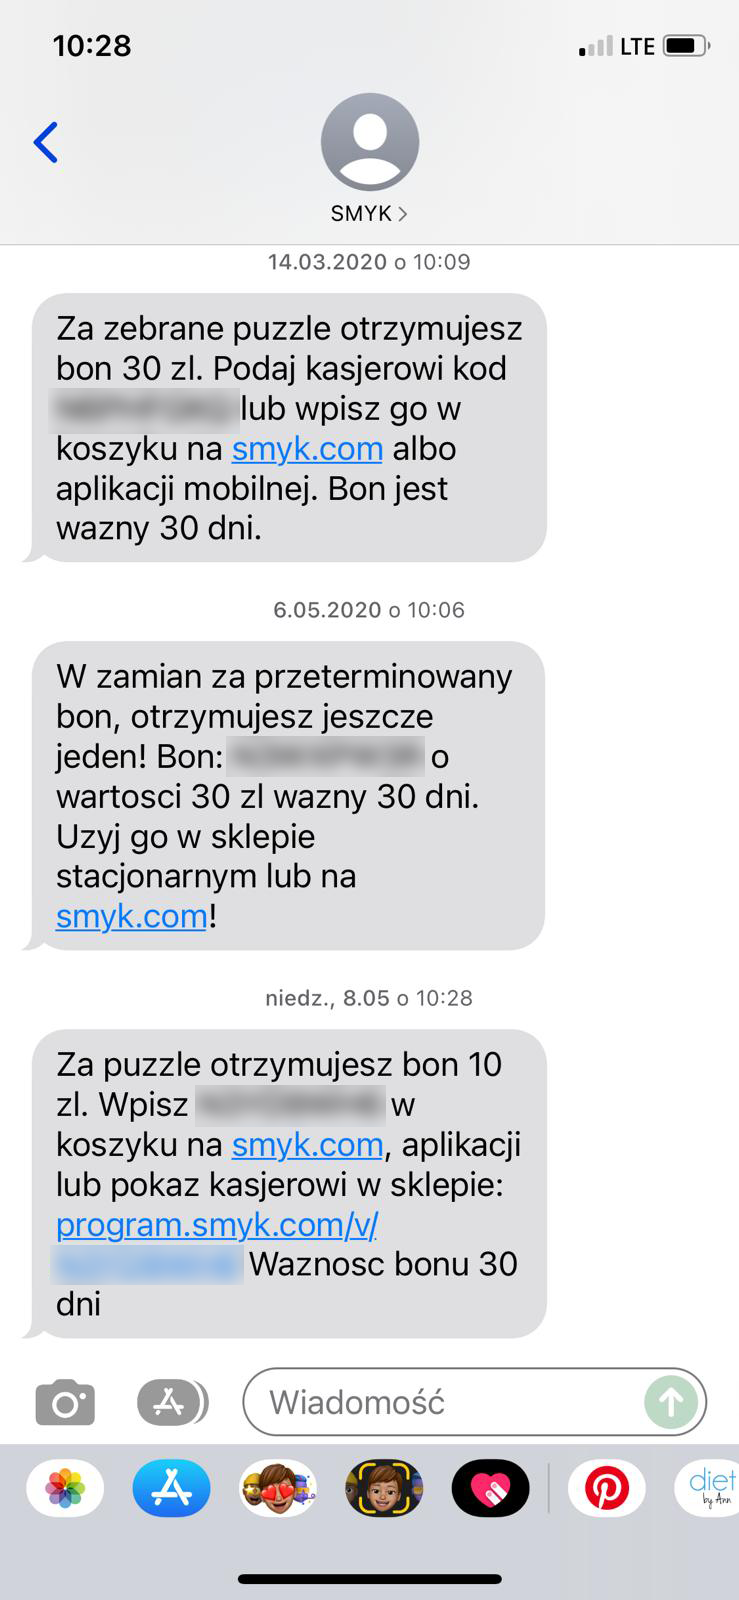 SMS marketing